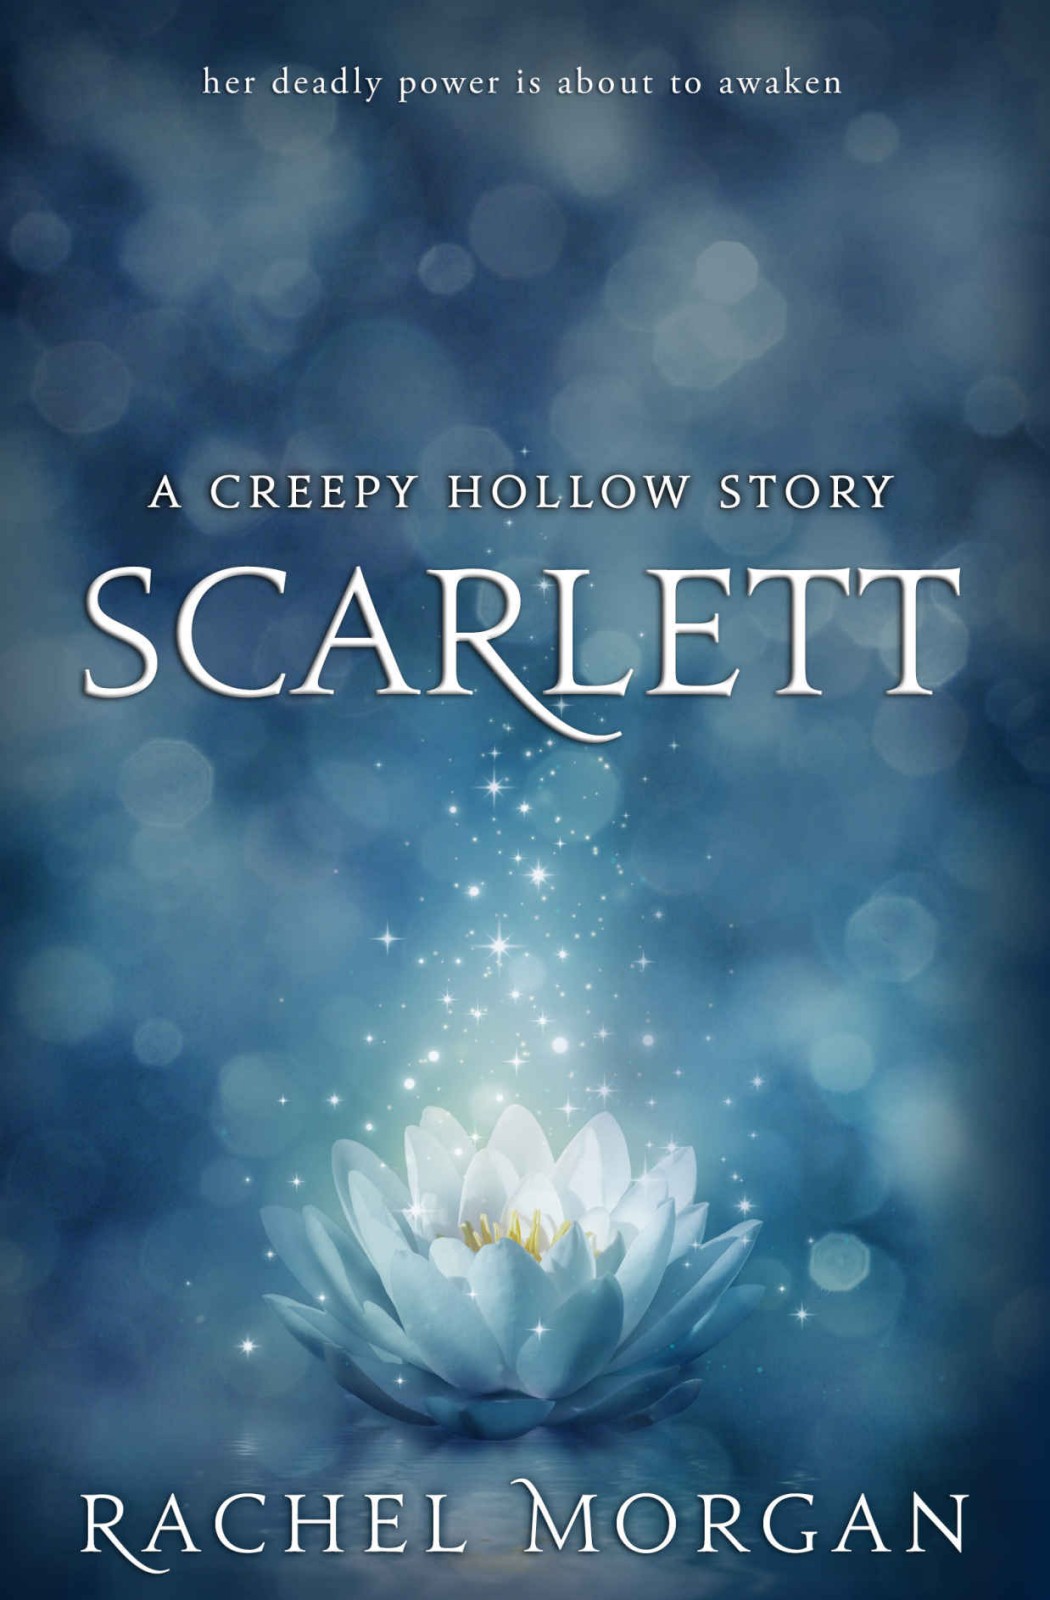 creepy hollow 05.5 - scarlett